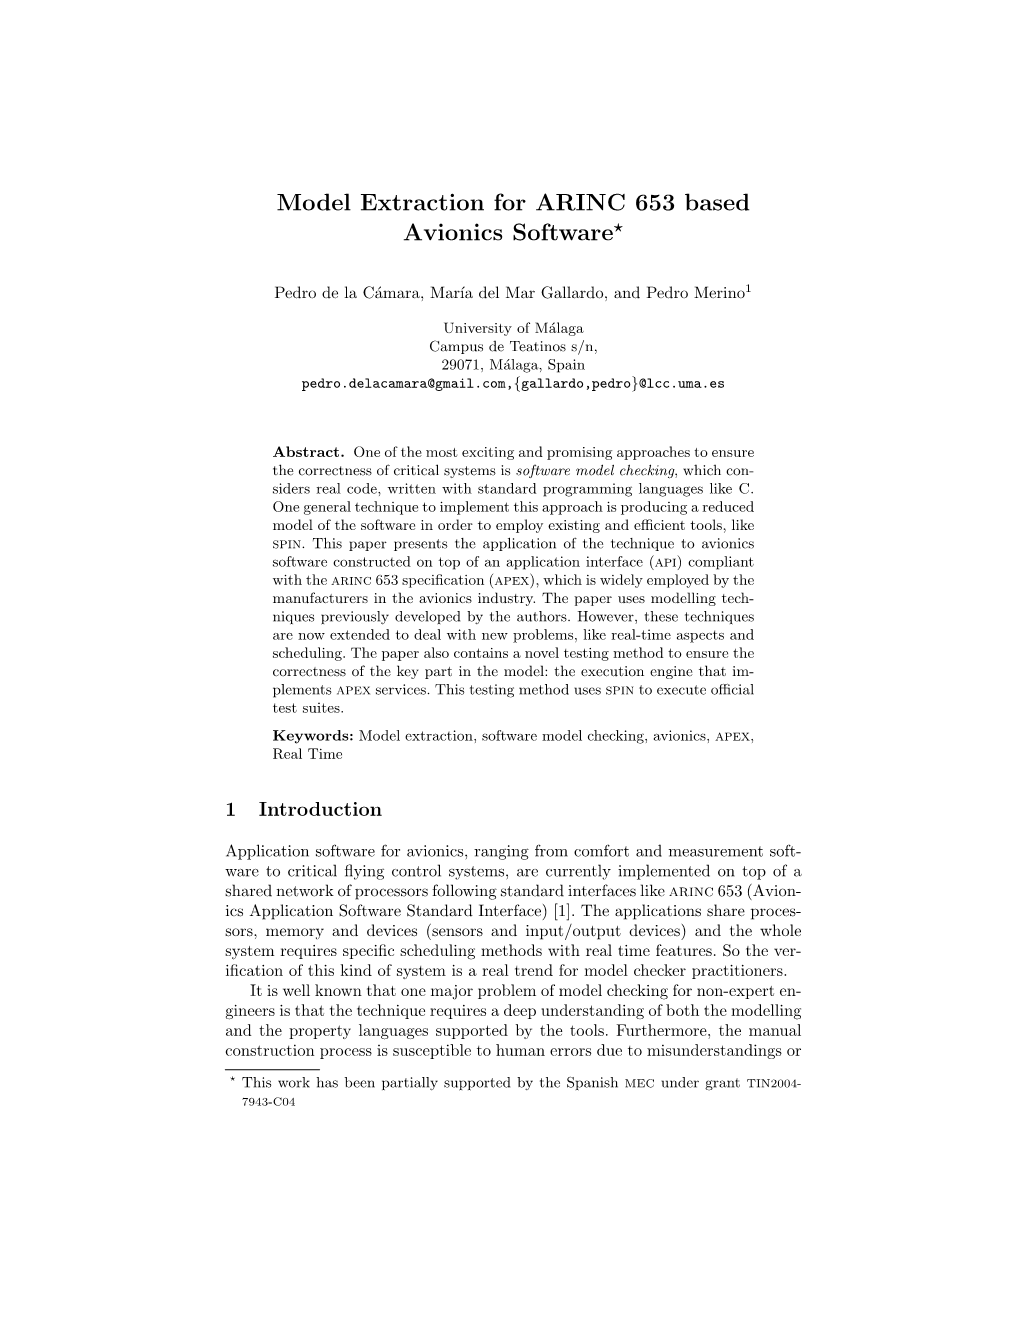 Model Extraction for ARINC 653 Based Avionics Software*